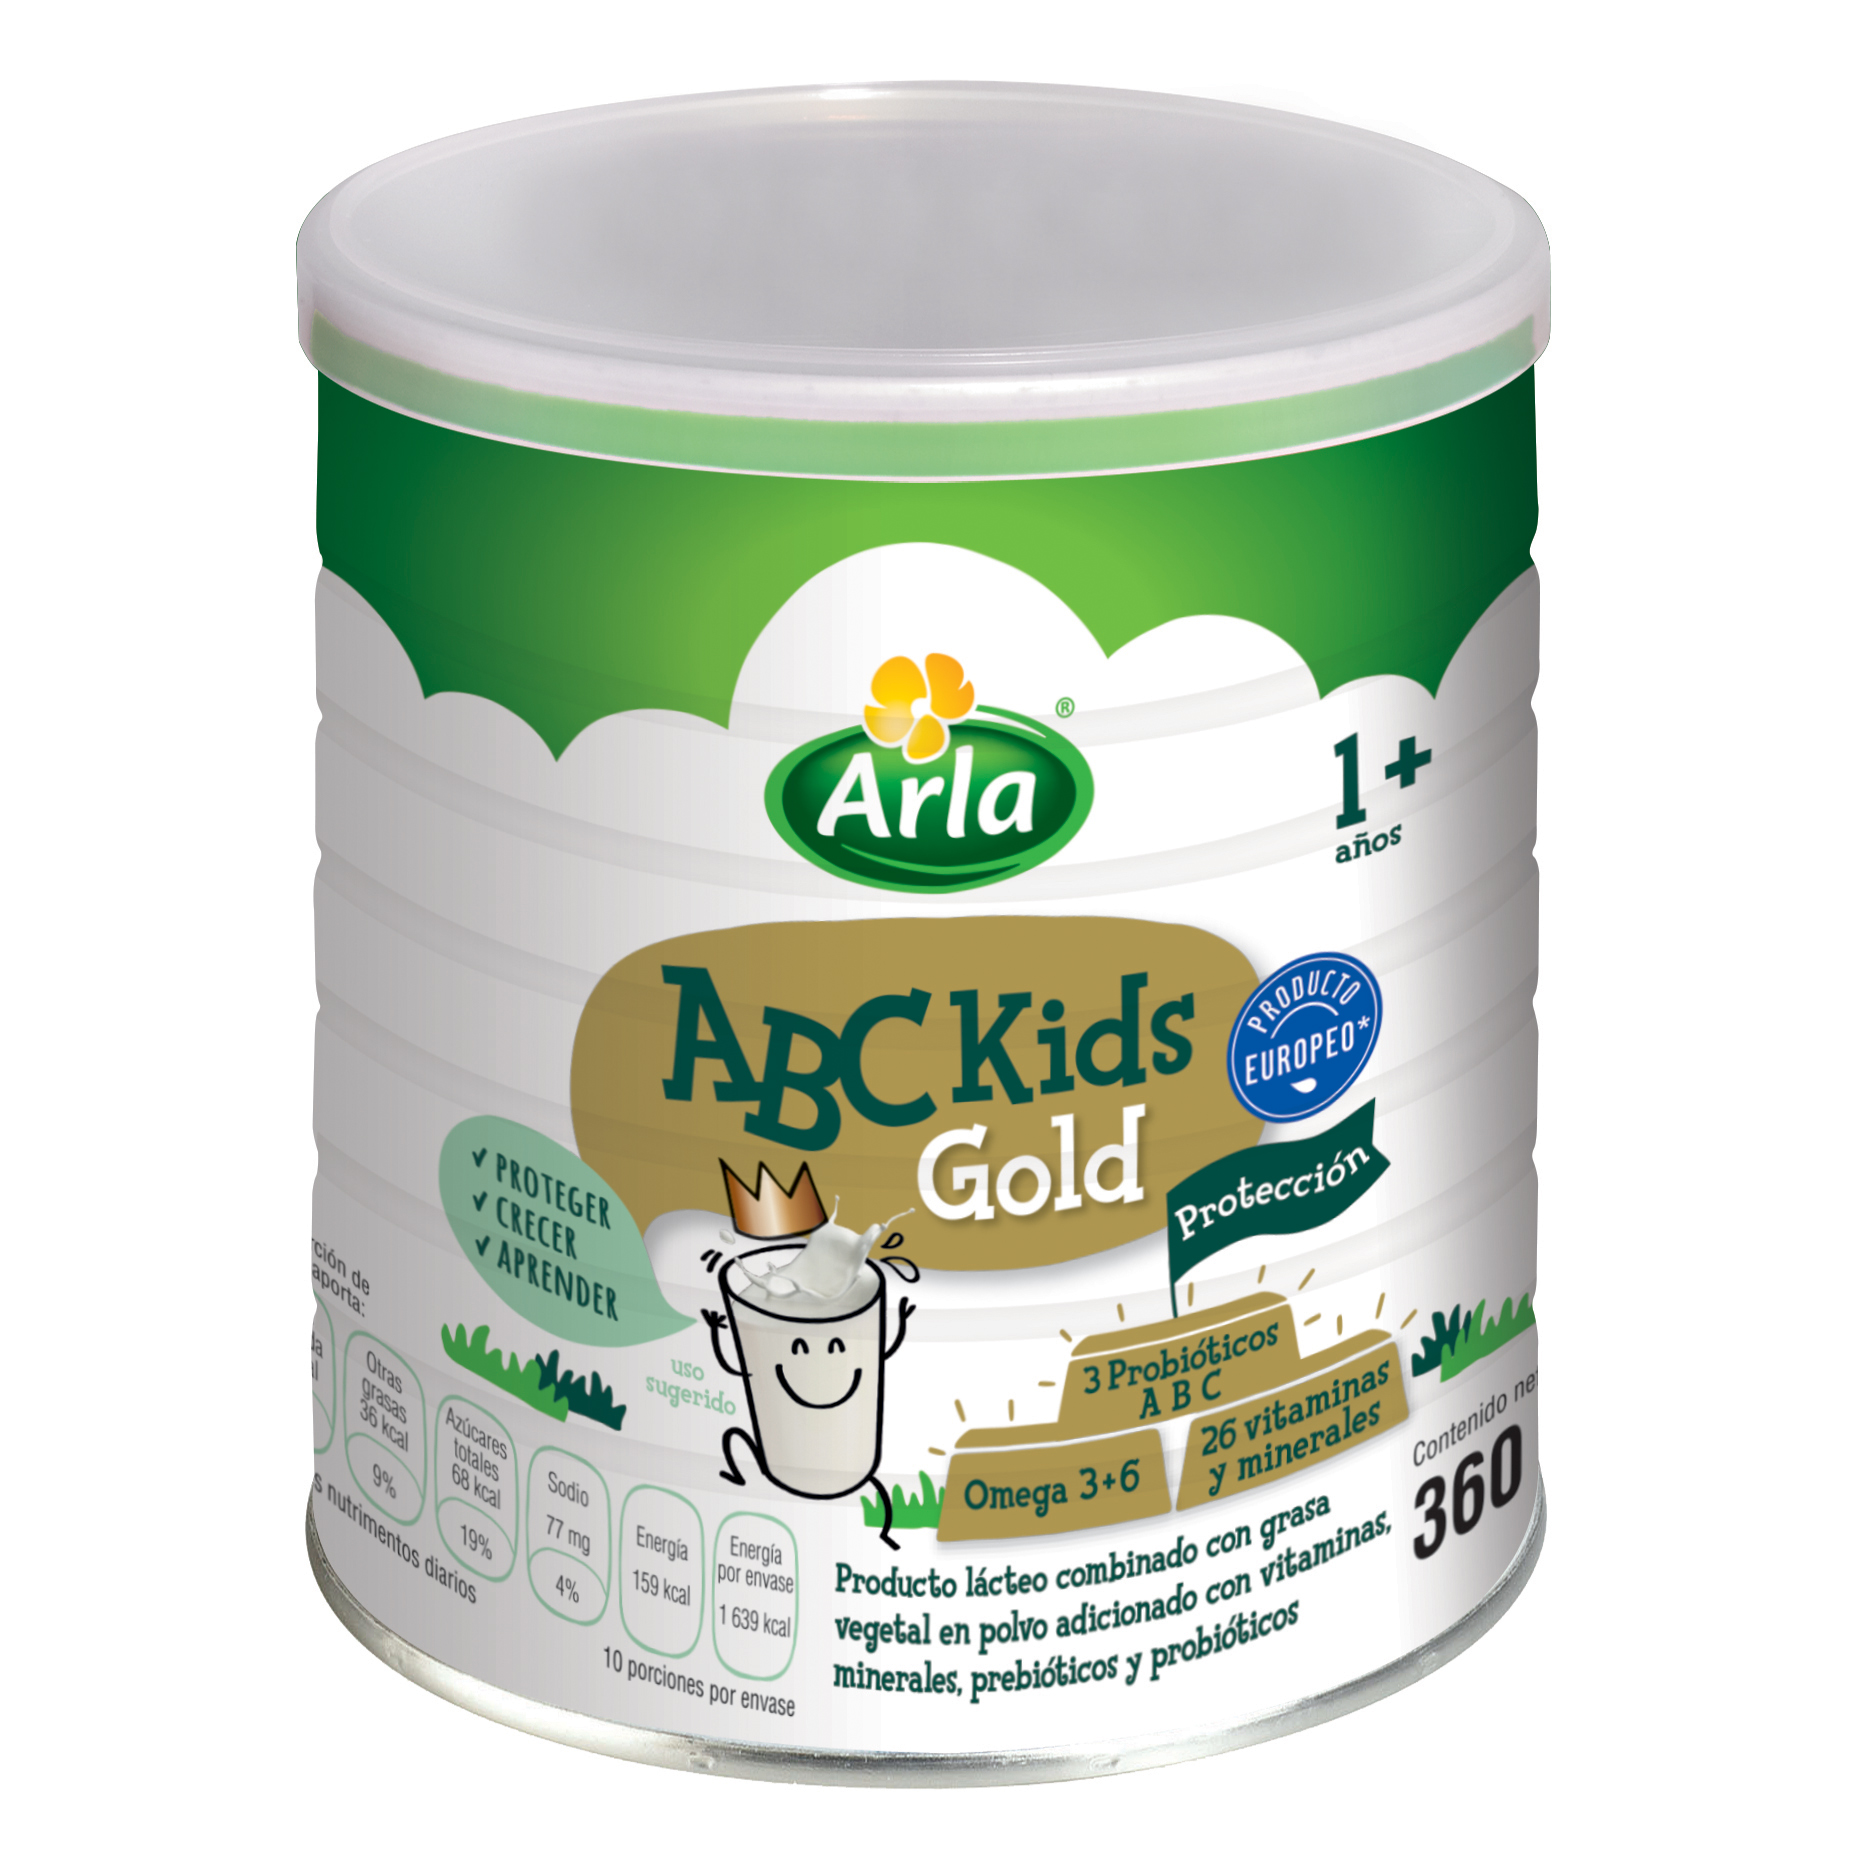 Arla ABC Kids® ABC Kids GOLD Lata 360g